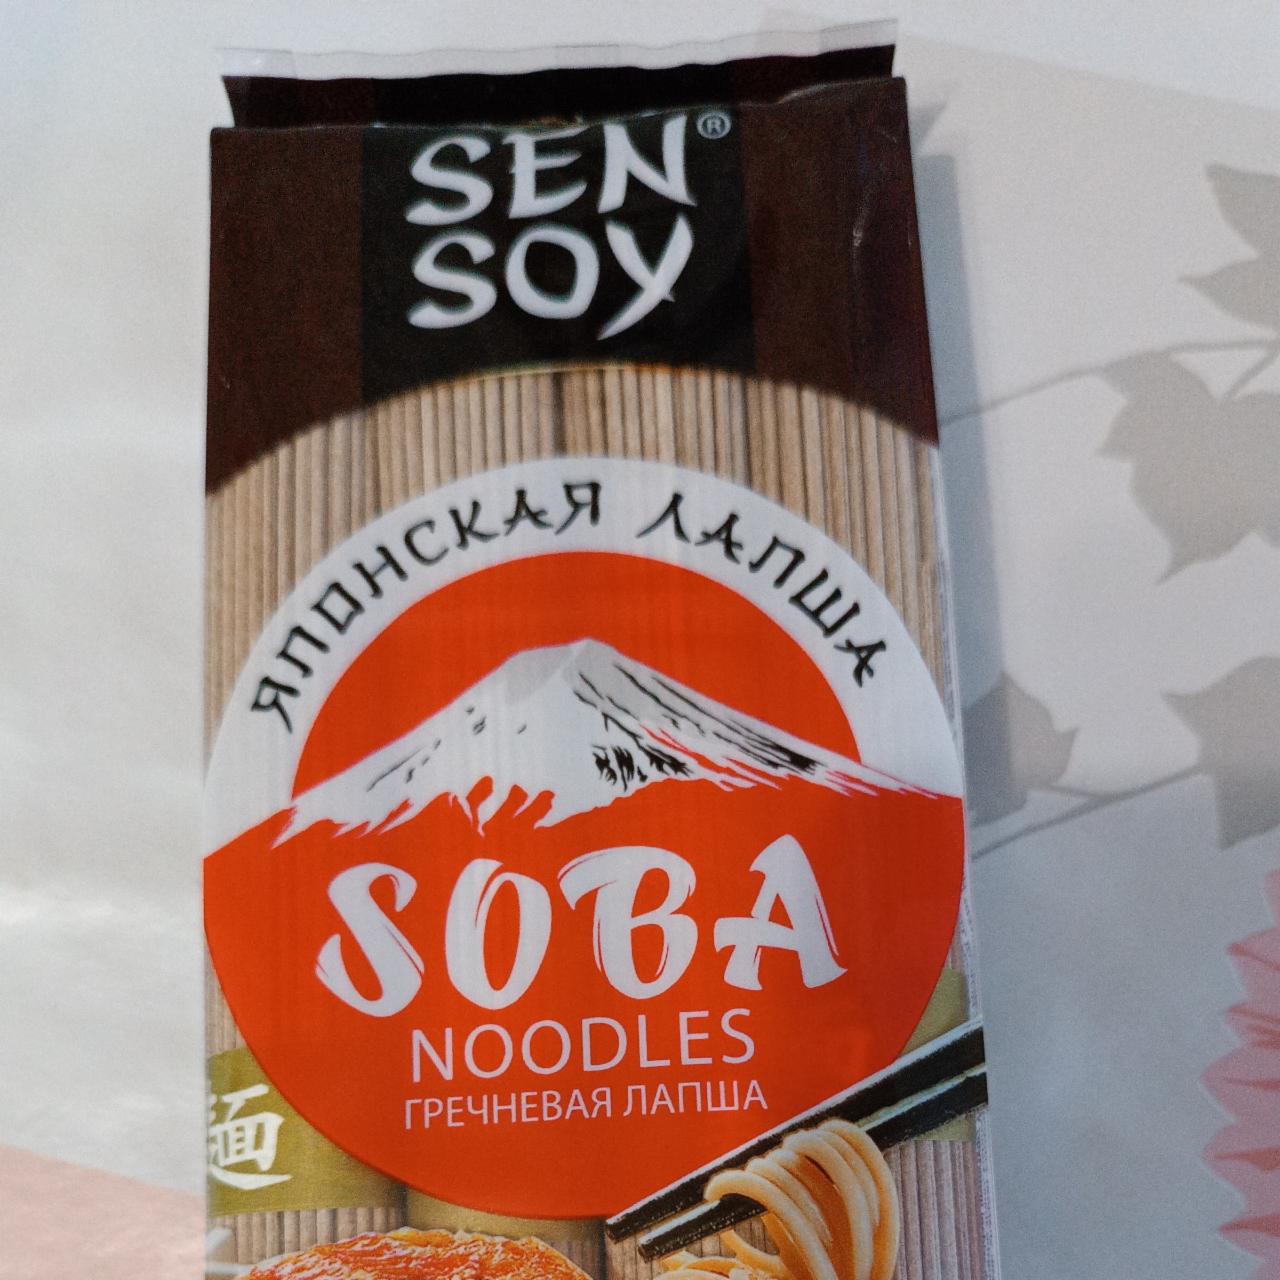 Фото - Гречневая лапша Noodles Sen Soy